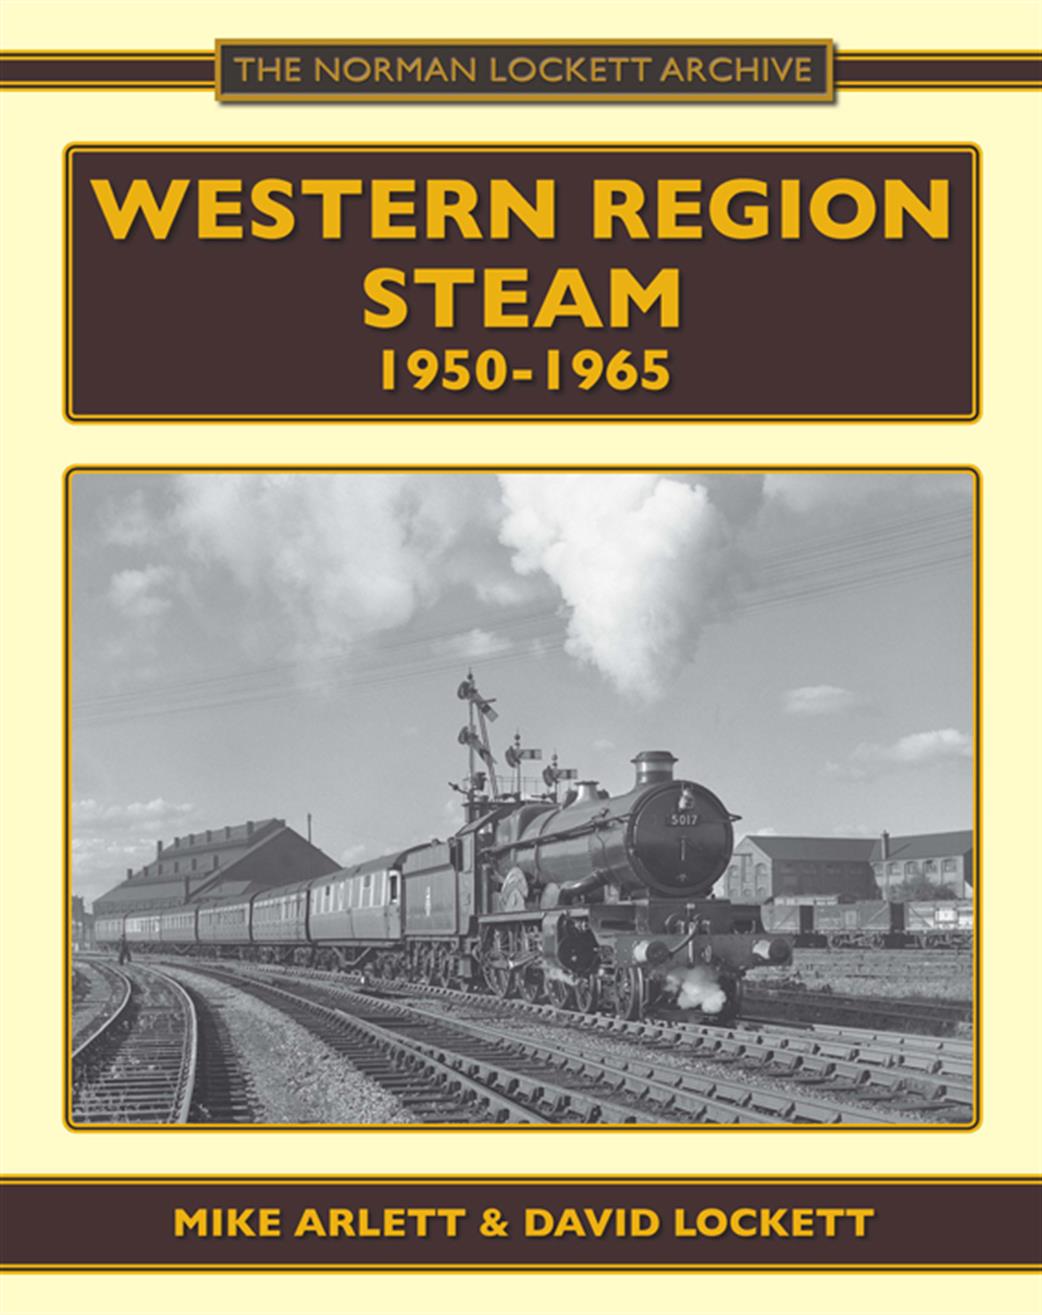 Lightmoor Press LockettBRW Western Region Steam 1950-1965 Norman Lockett Archive